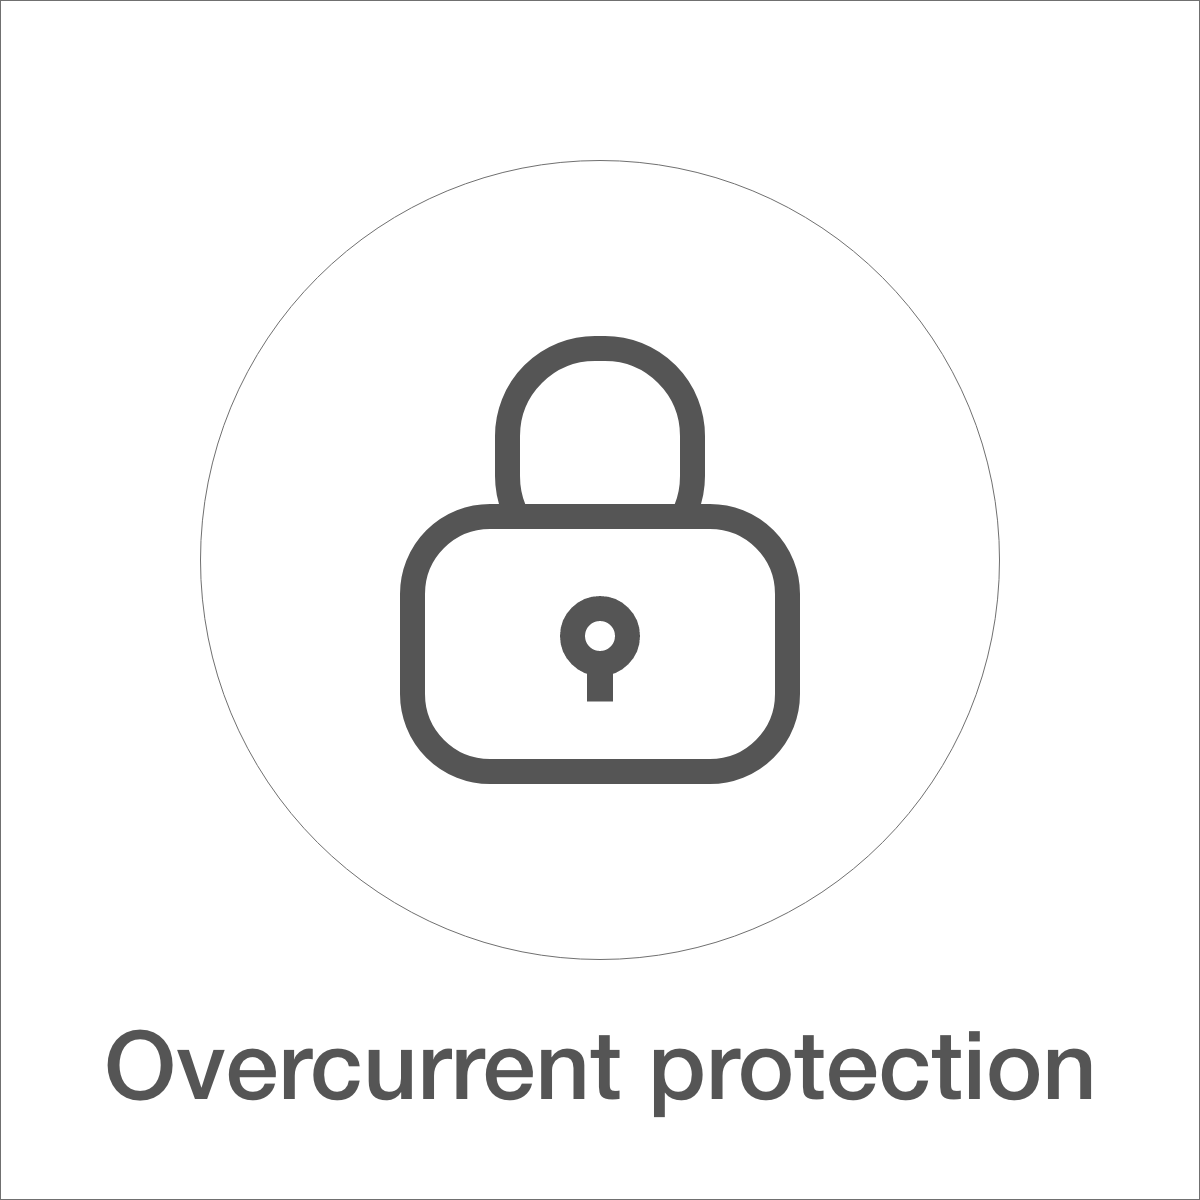 Overcurrent protection icon